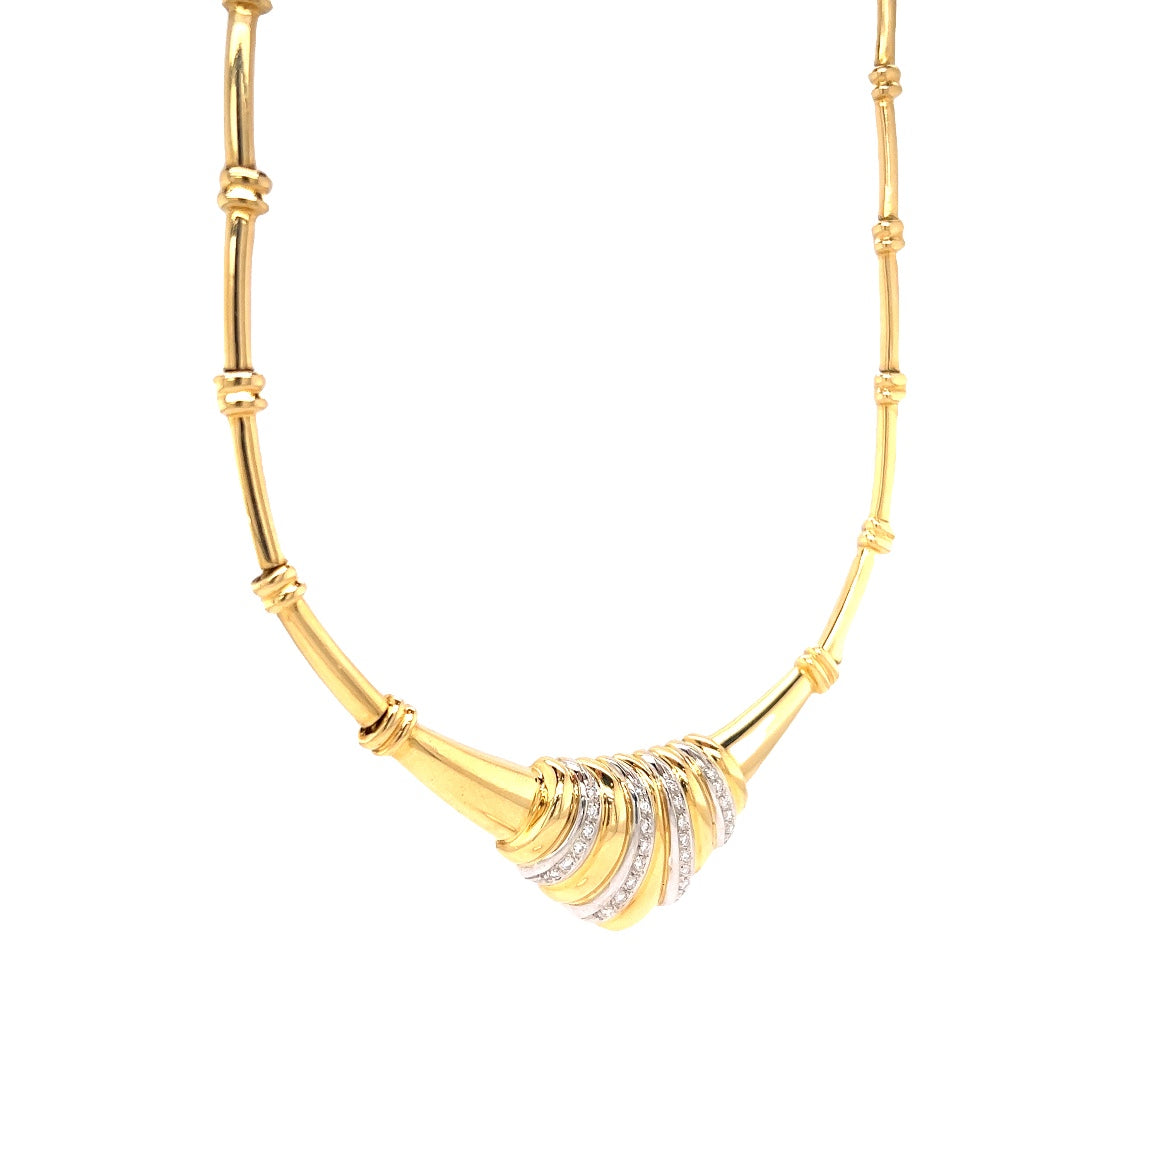 .56 Modern Brilliant Cut Diamond Necklace in 14k GoldComposition: 14 Karat White Gold/14 Karat Yellow GoldTotal Diamond Weight: .56 ctTotal Gram Weight: 40.5 gInscription: 750